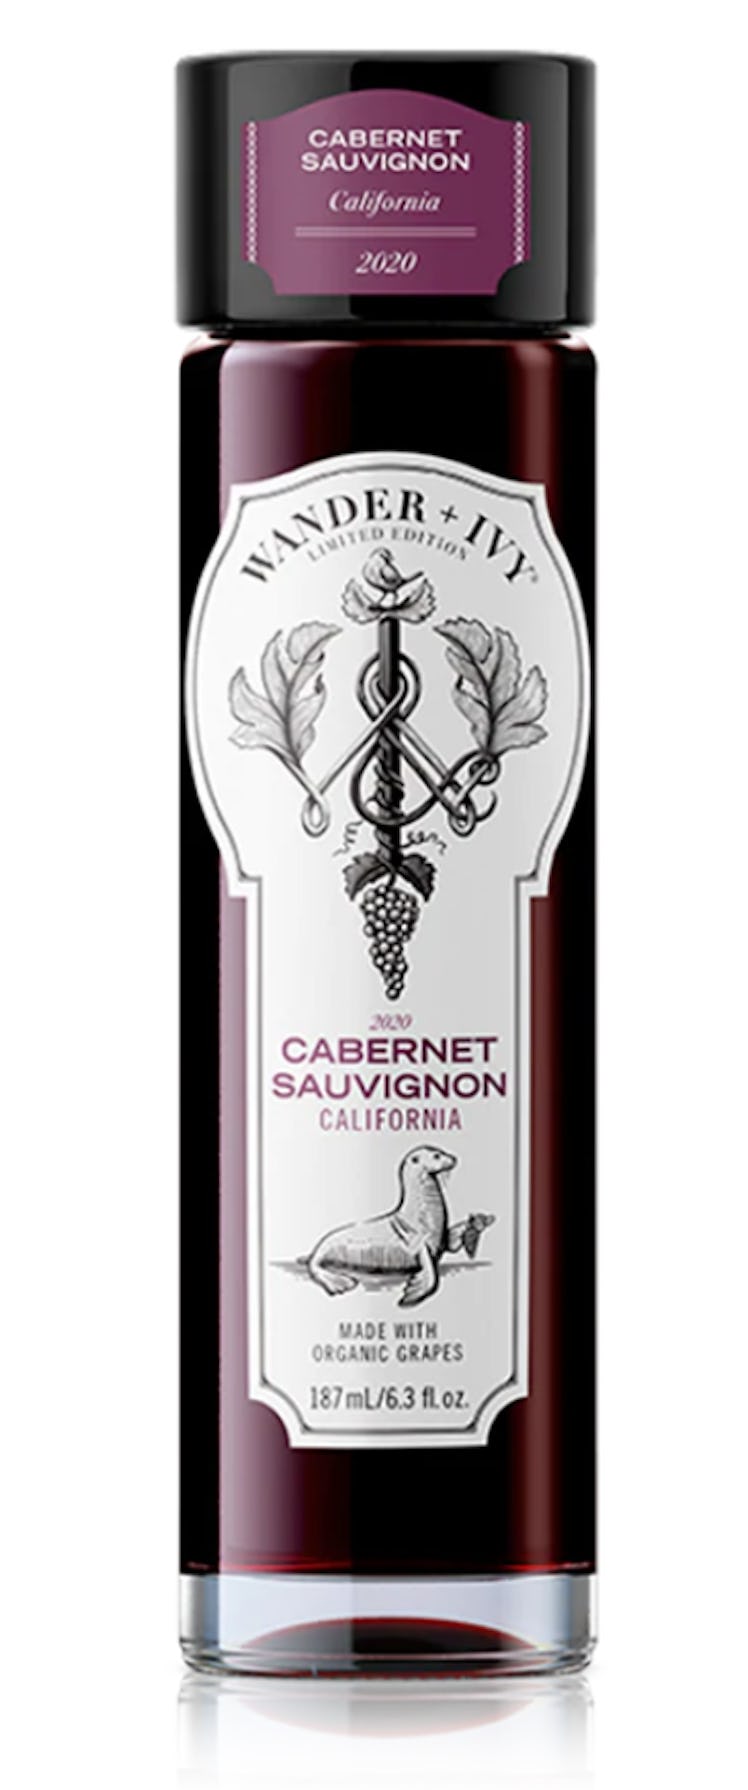 Limited Edition Cabernet Sauvignon